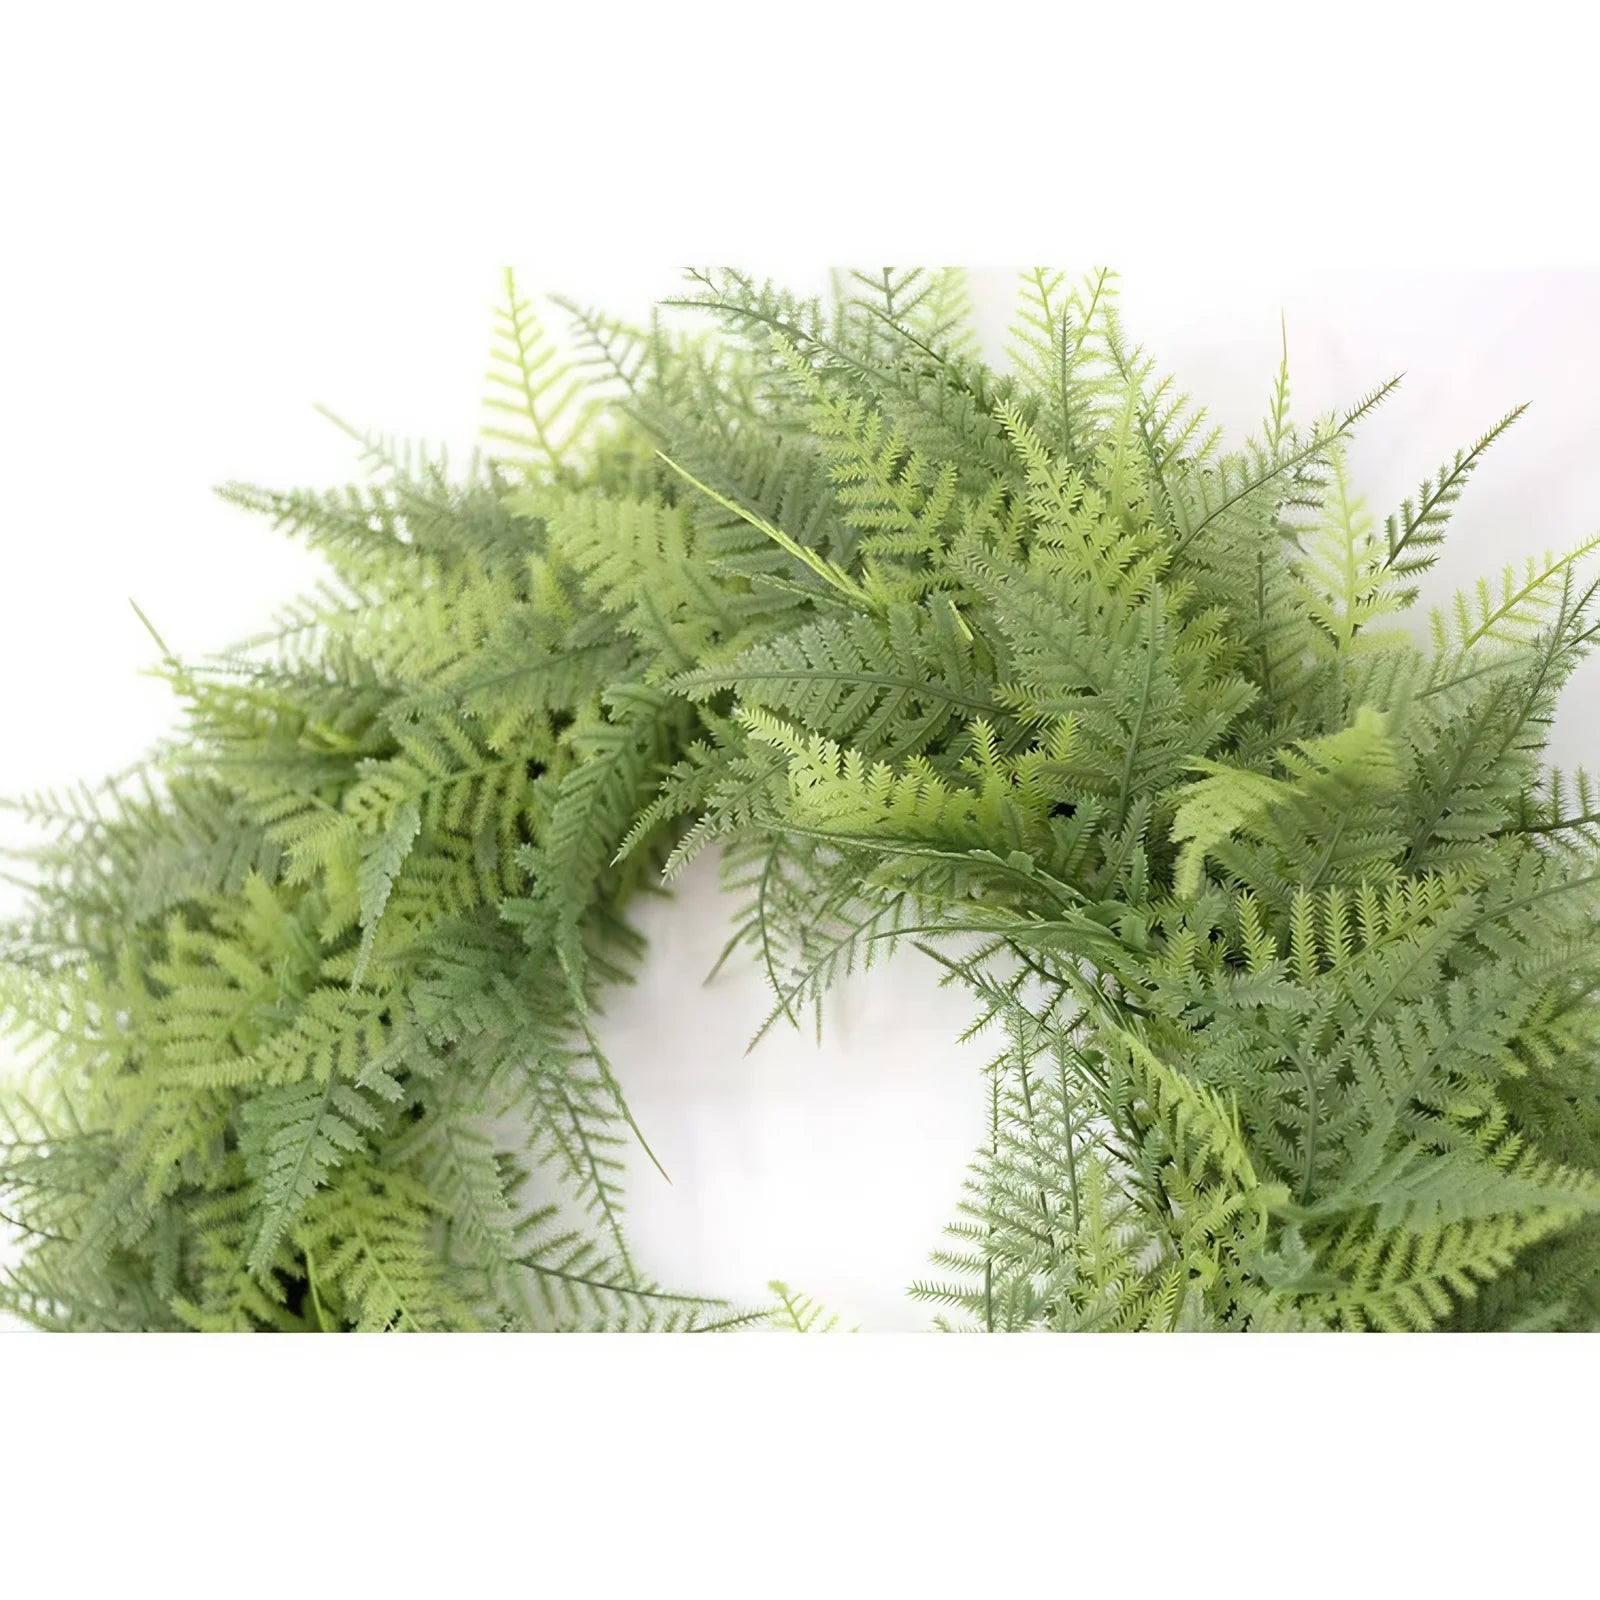 fern wreath close-up